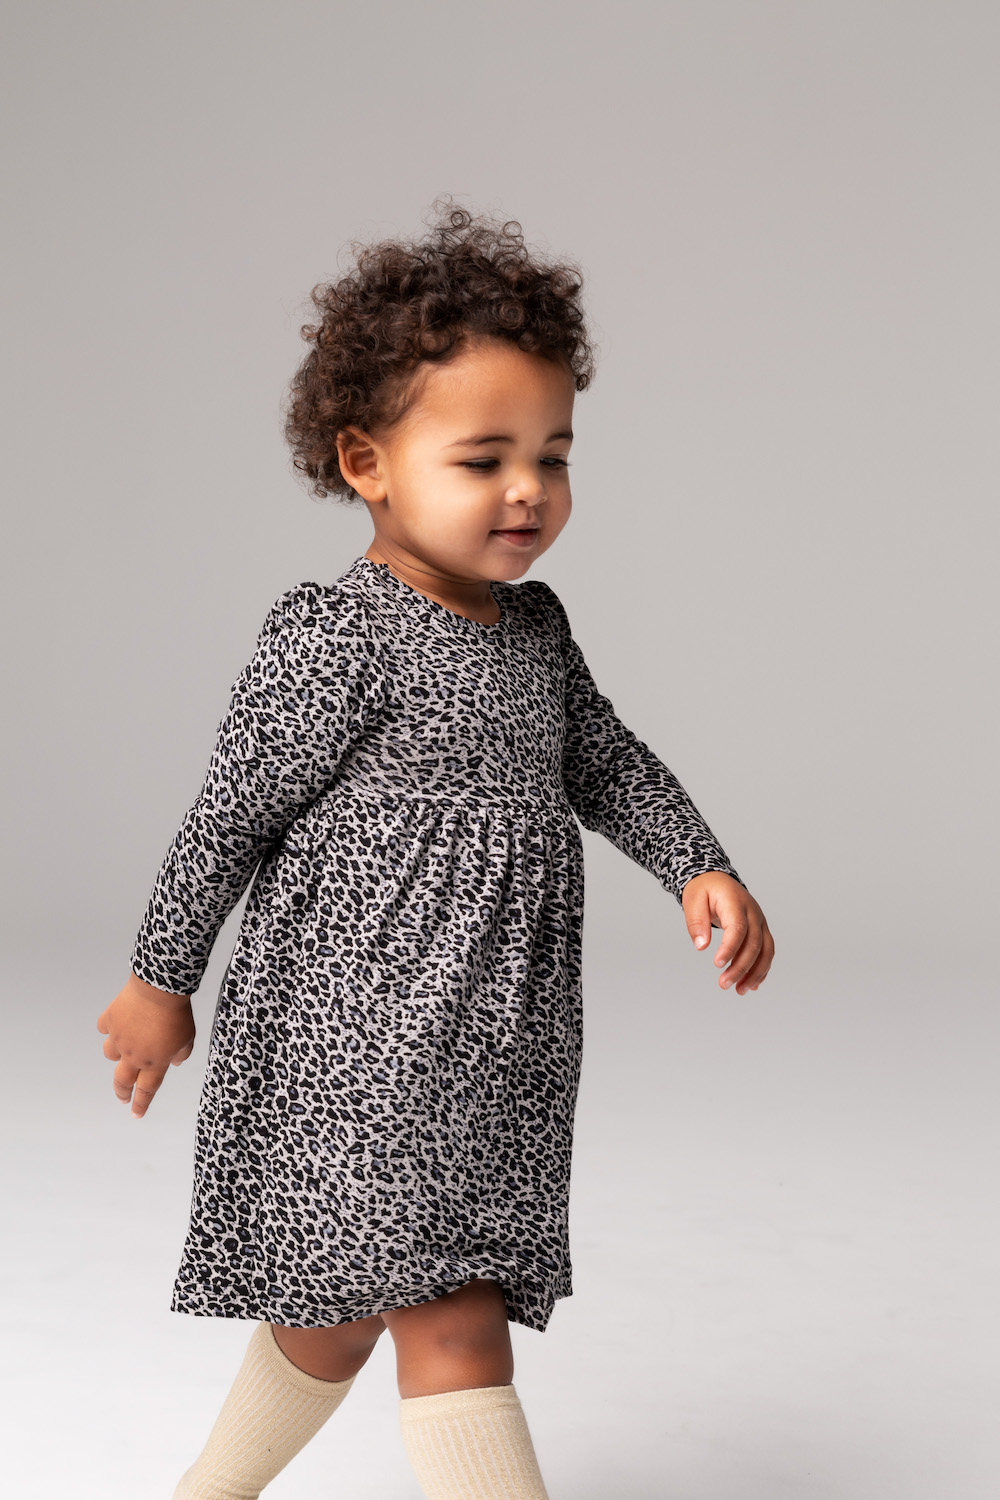 Dader ontsnappen Plaats MarMar Leo Ramona Grey babydress jurk luipaard grijs-zwart - Minipop